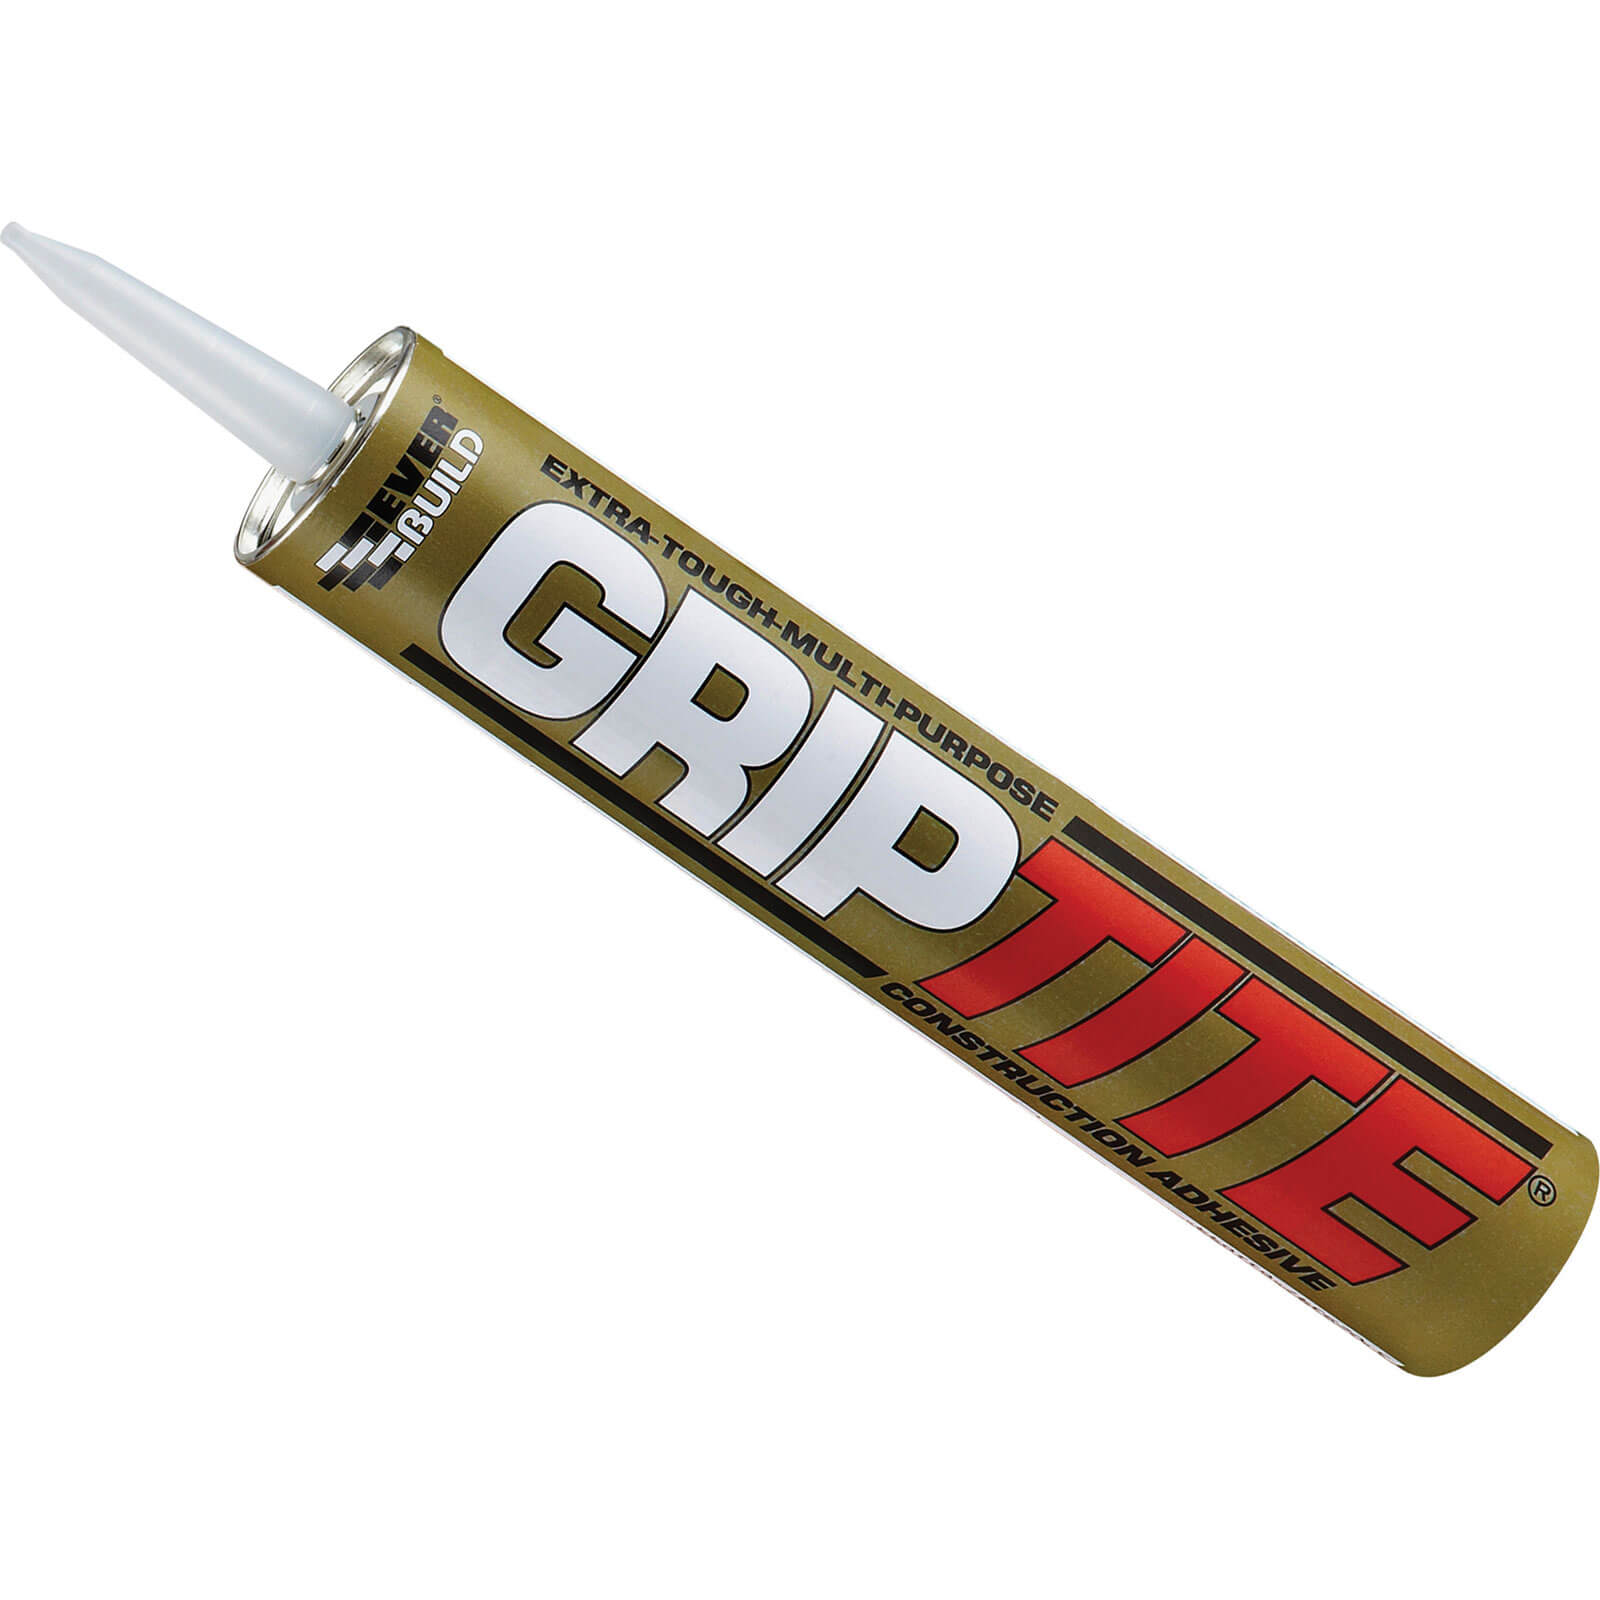 Everbuild Griptite Construction Gap Filler & Adhesive C4 Cartridge 350ml